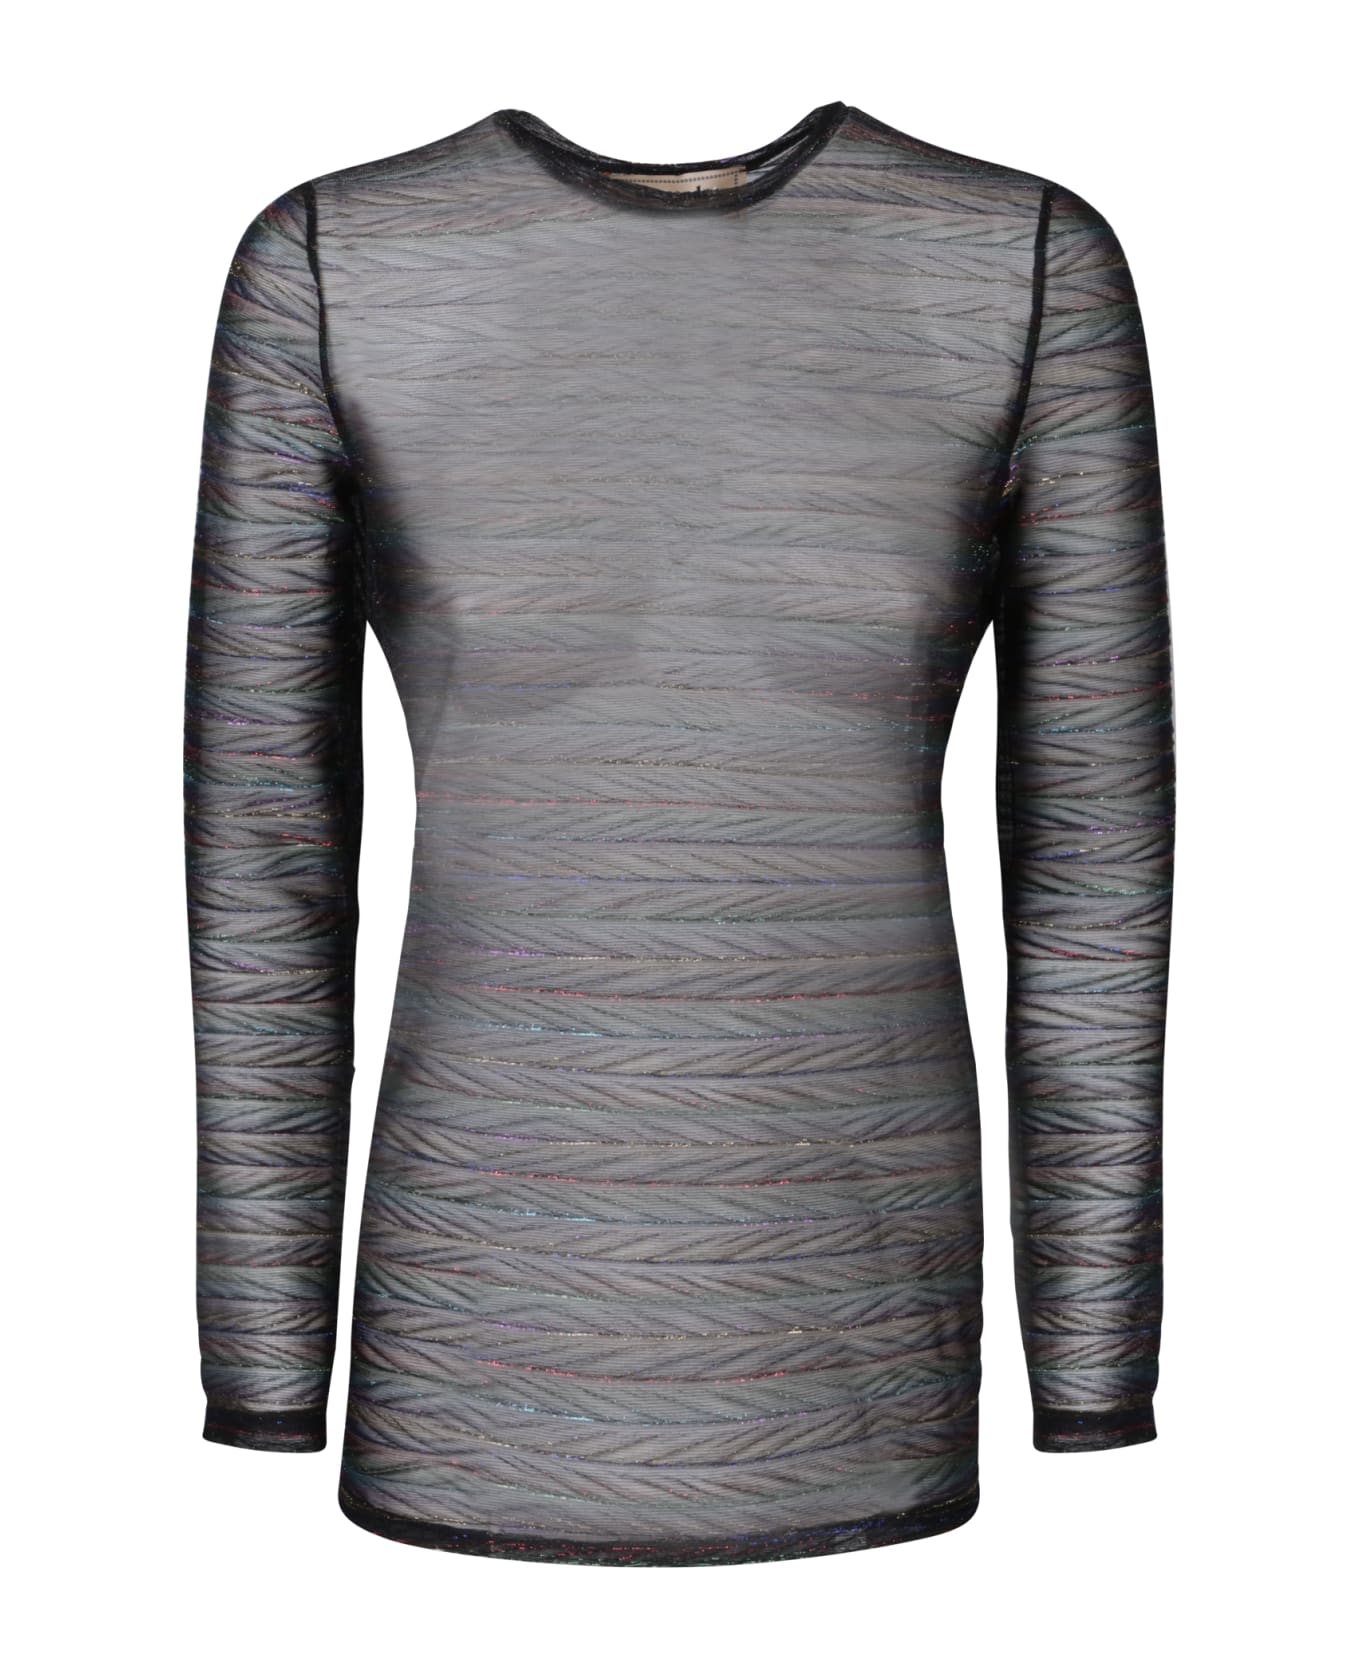 Alessandro Enriquez Striped Metallic Black/multicolor Shirt - Black